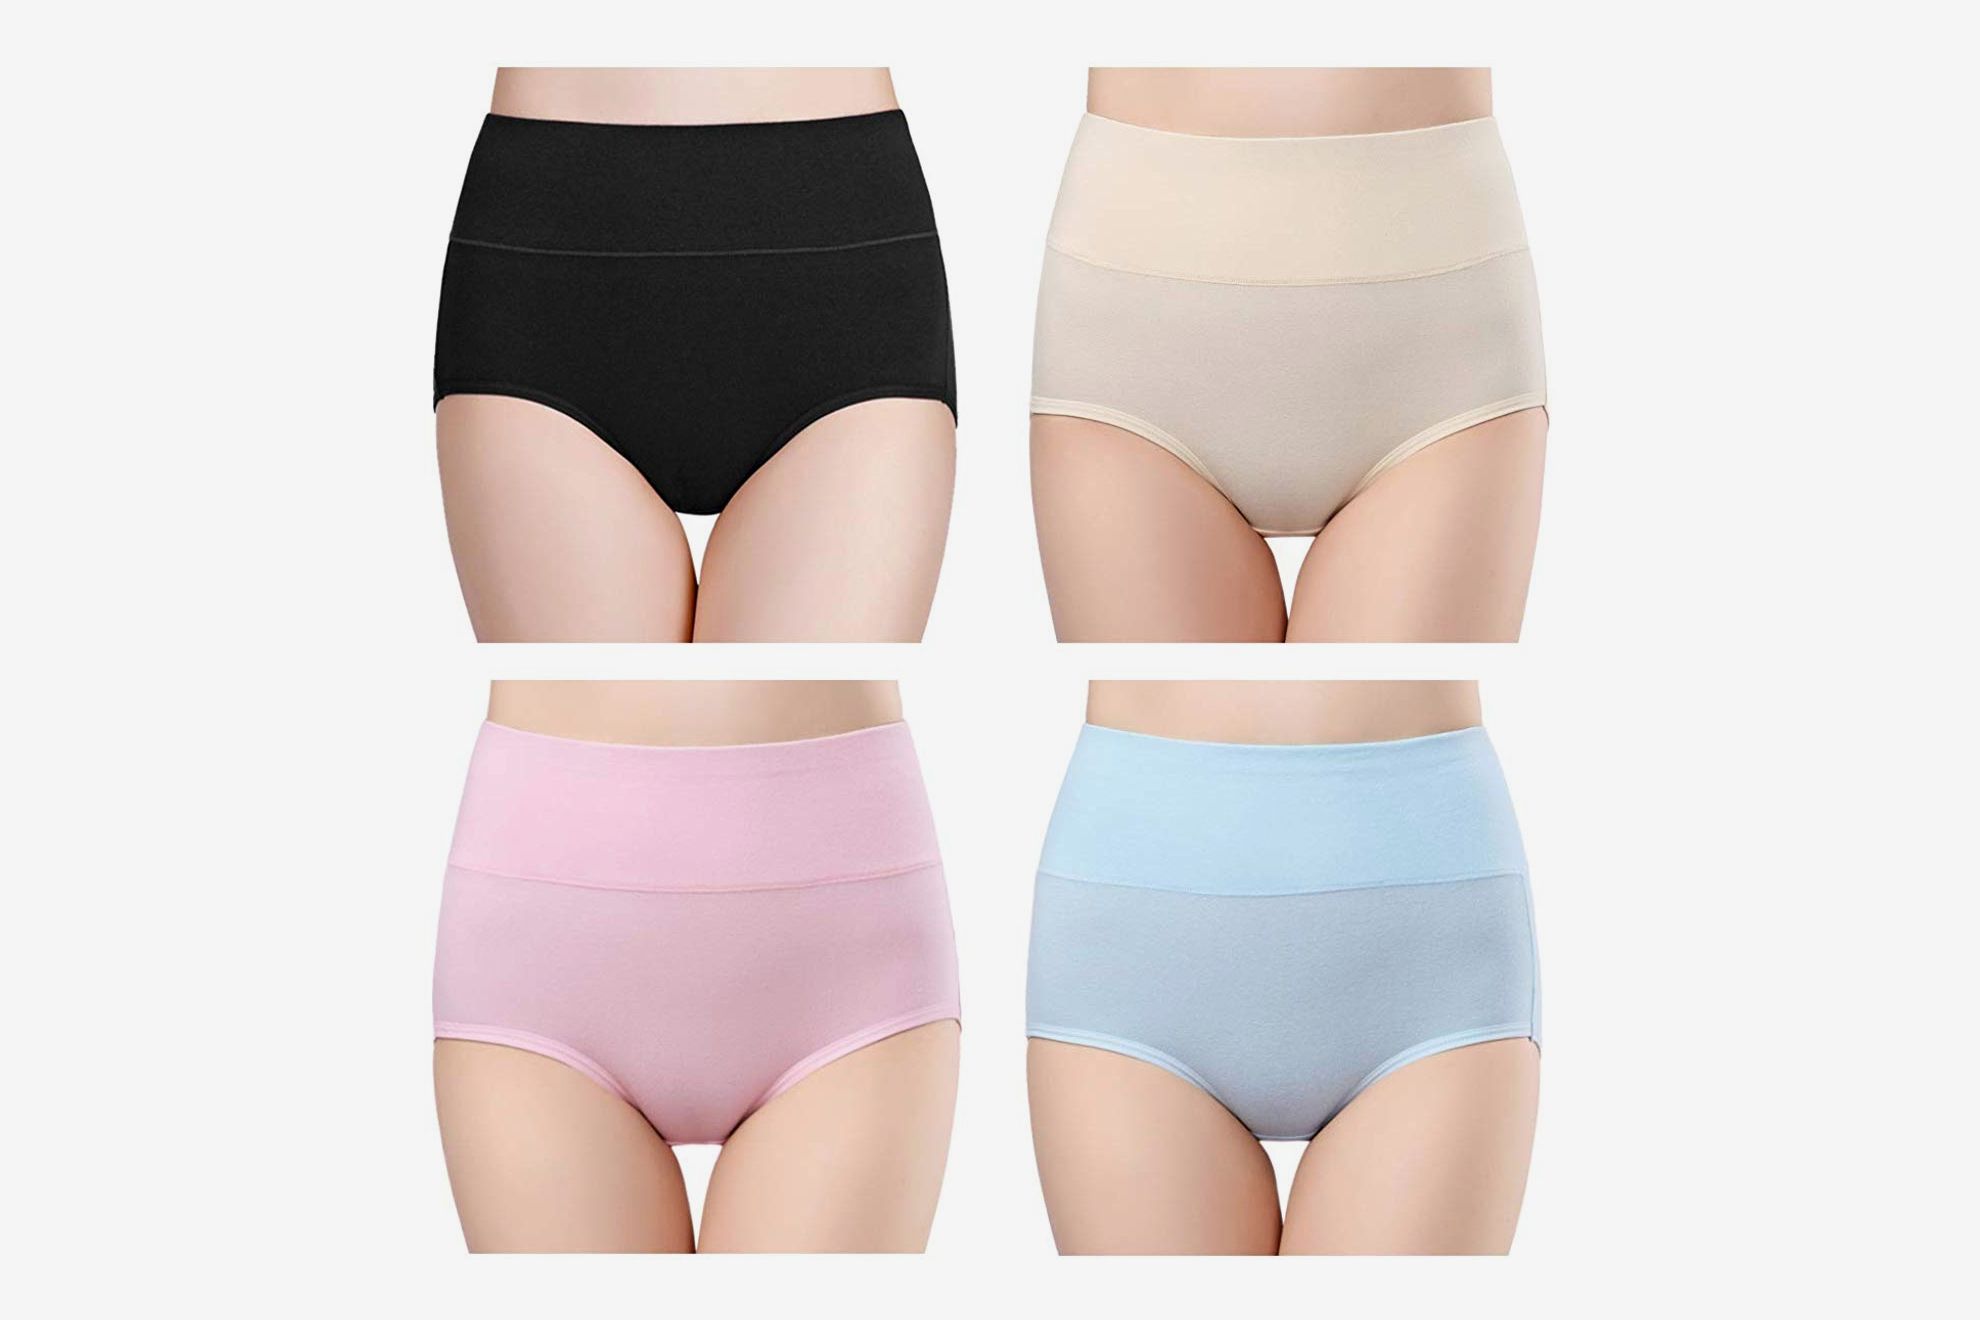 Women's Cotton Underwear,Plus Size Soft Underwear Women Briefs,Ladies High Waisted Comfy Breathable Underpants Panties Packs